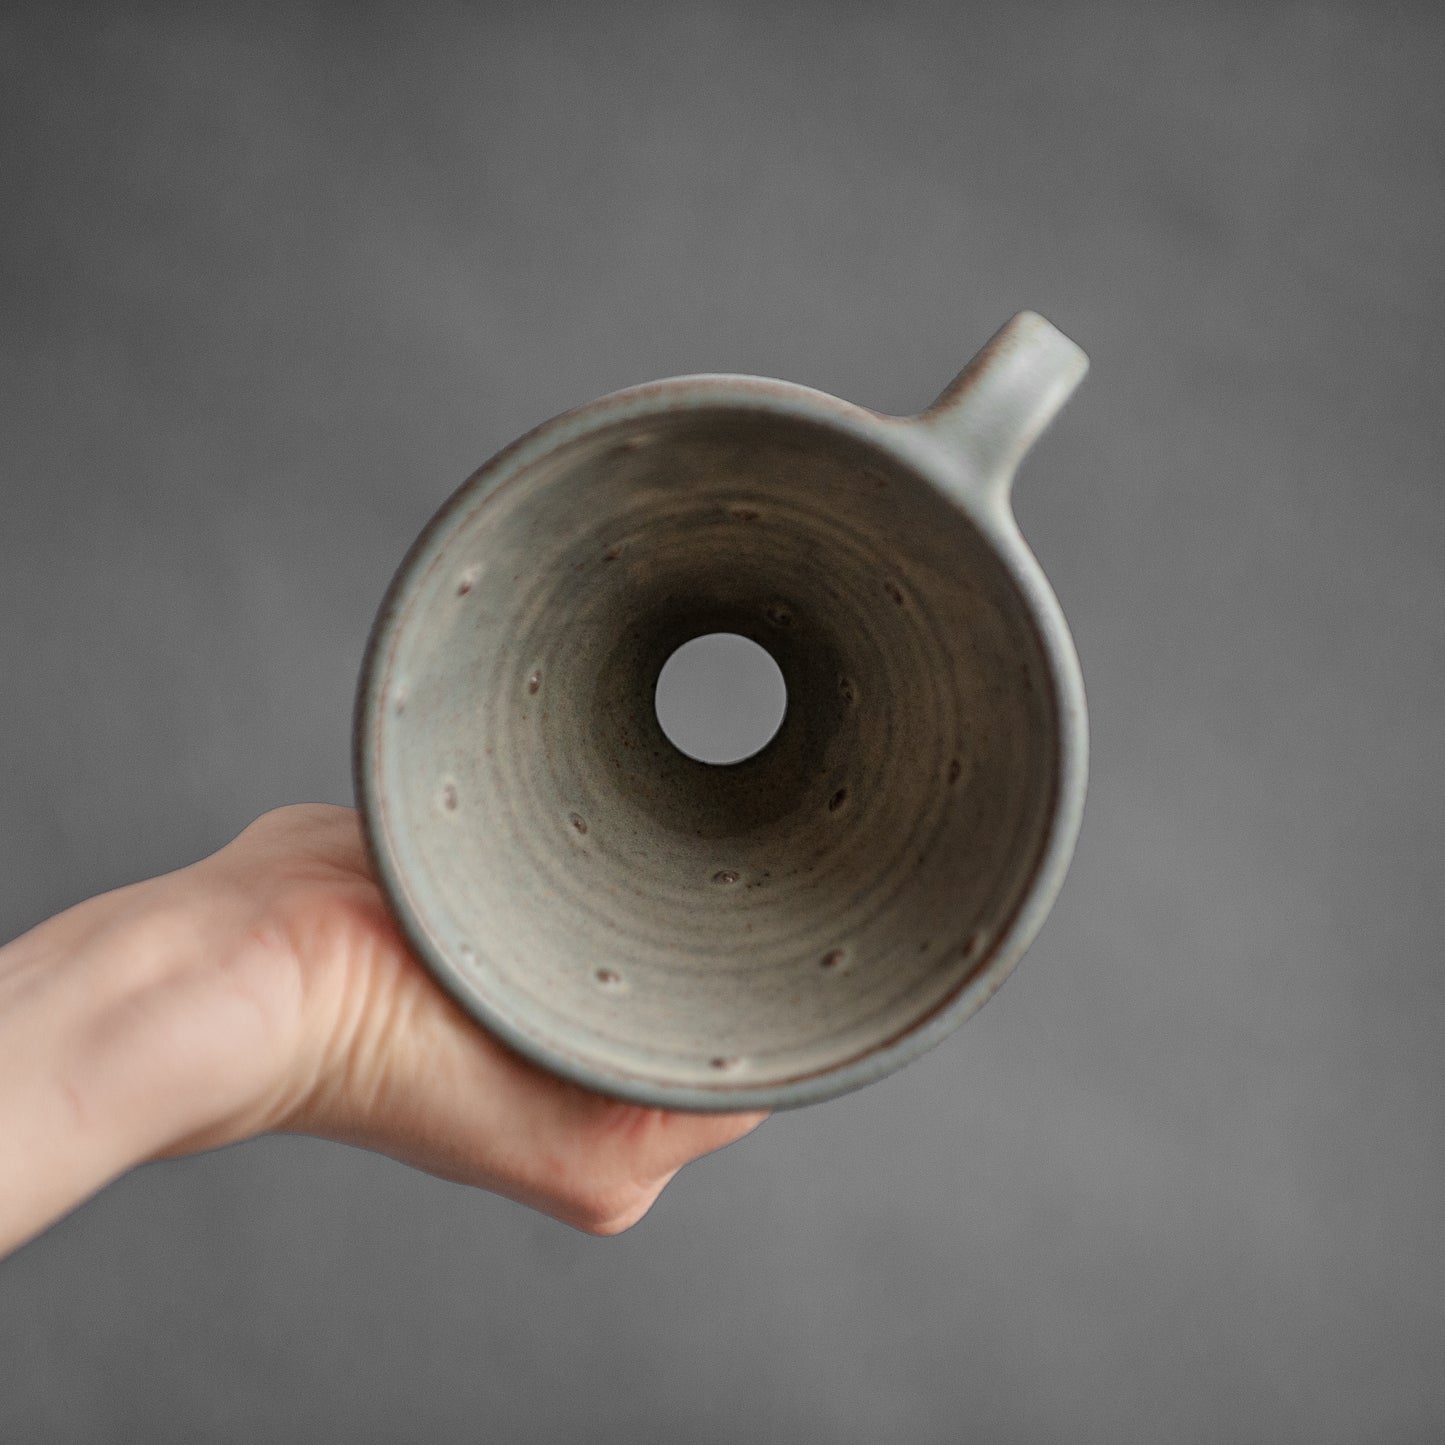 coffee brewing set in grey-blue